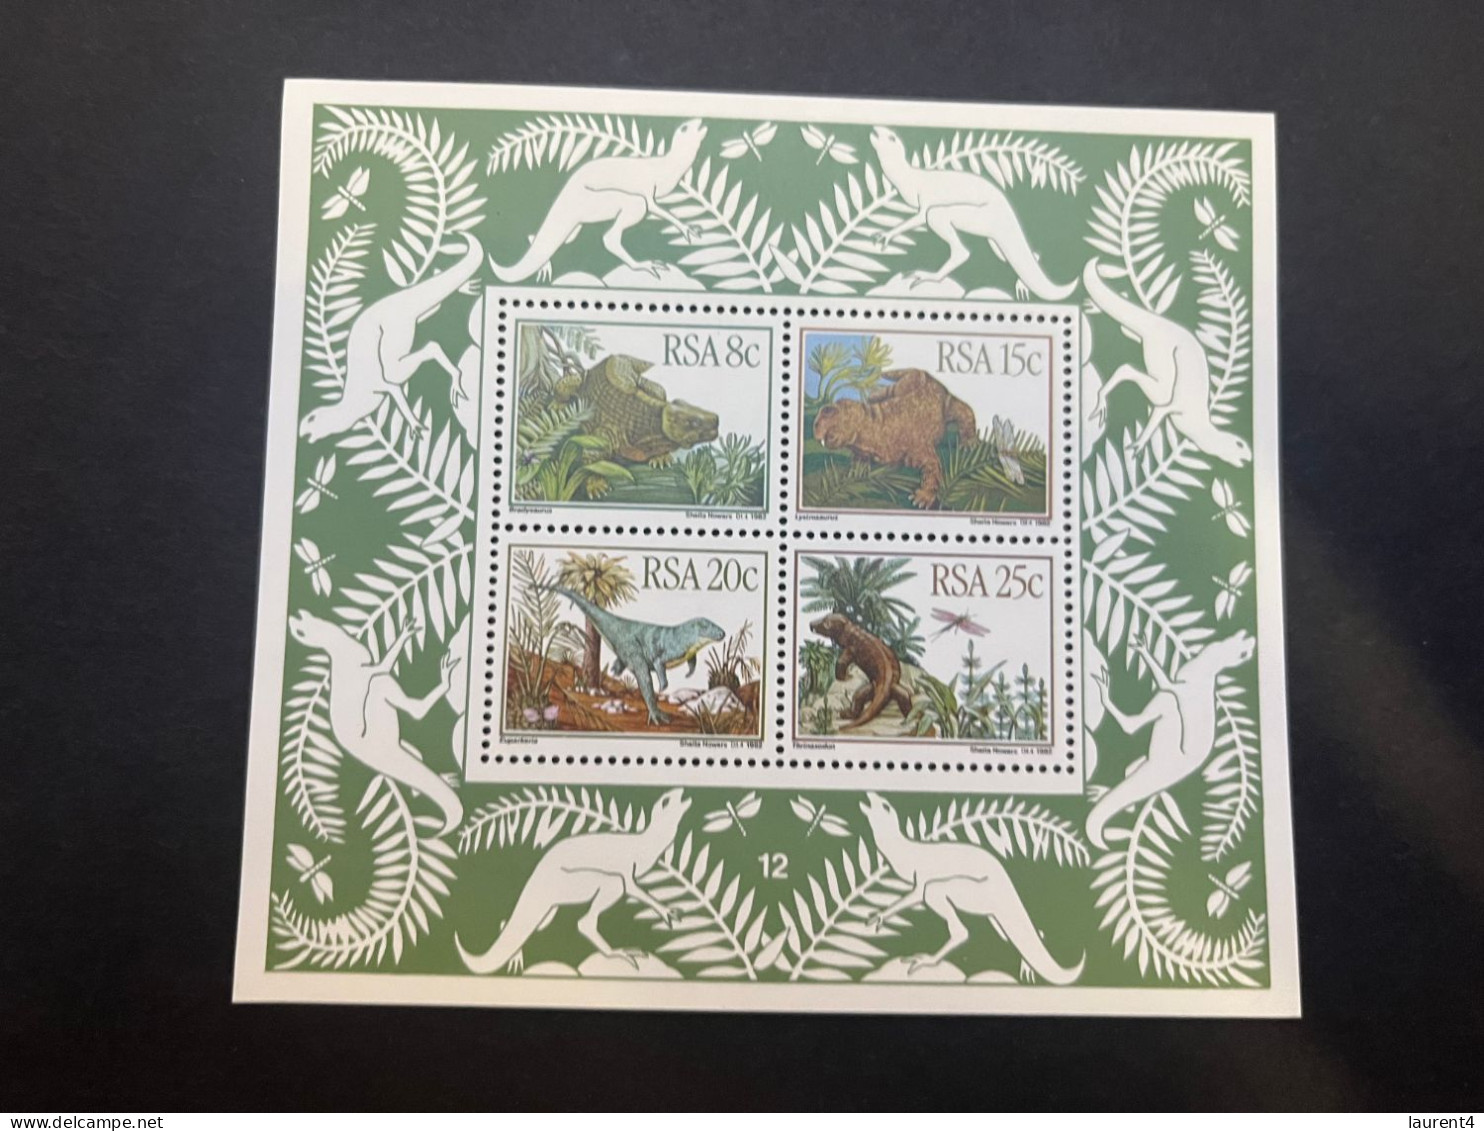 13-5-2024 (stamp) Mint (neuve) Mini-sheet - RSA South Africa - Dinosaurs - Preistorici